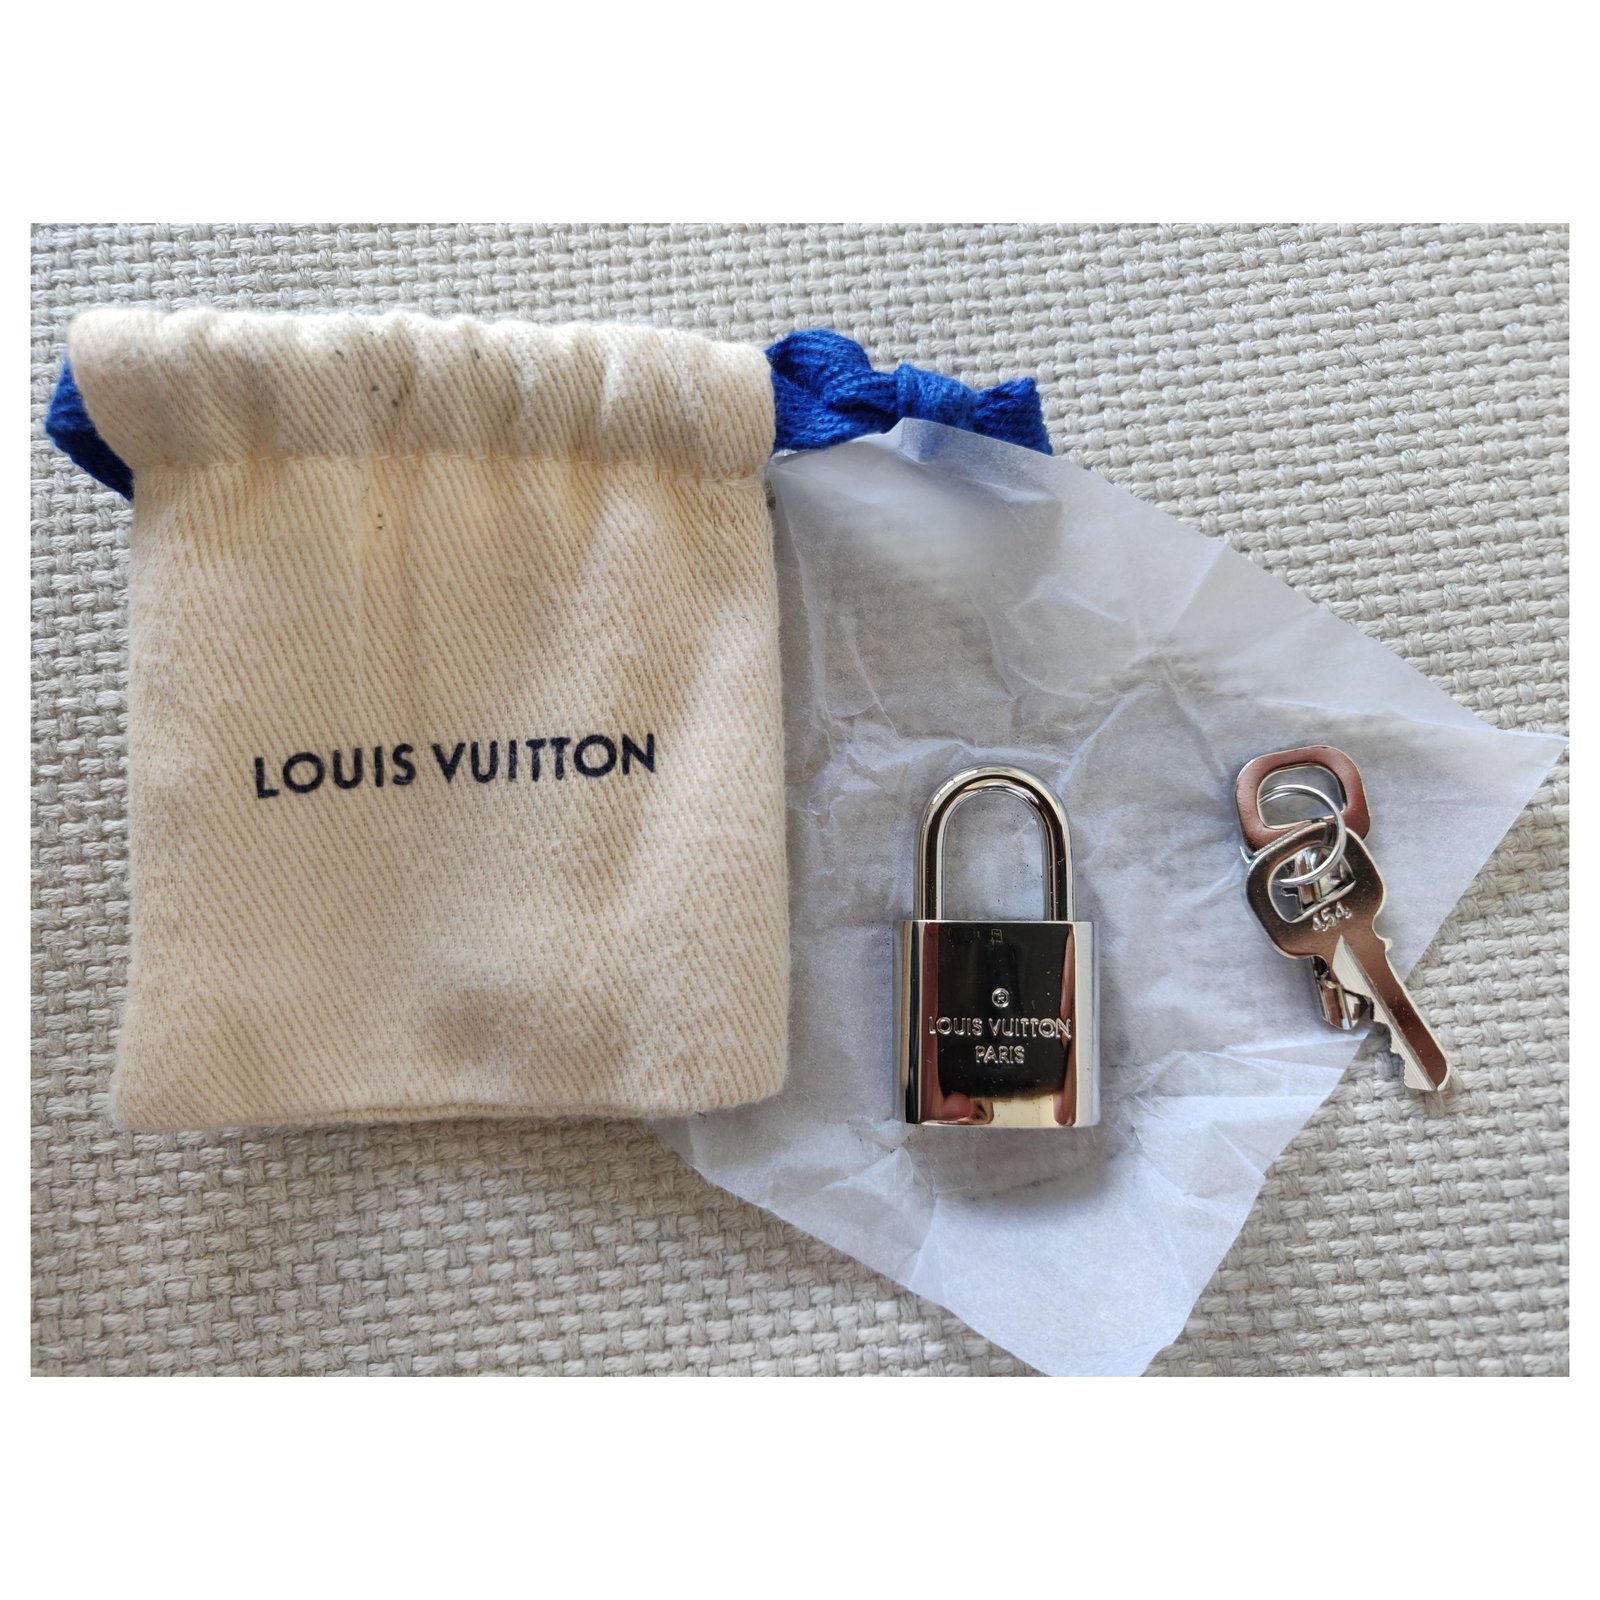 Louis Vuitton Roadster Handbag Damier Graphite Black 13707960